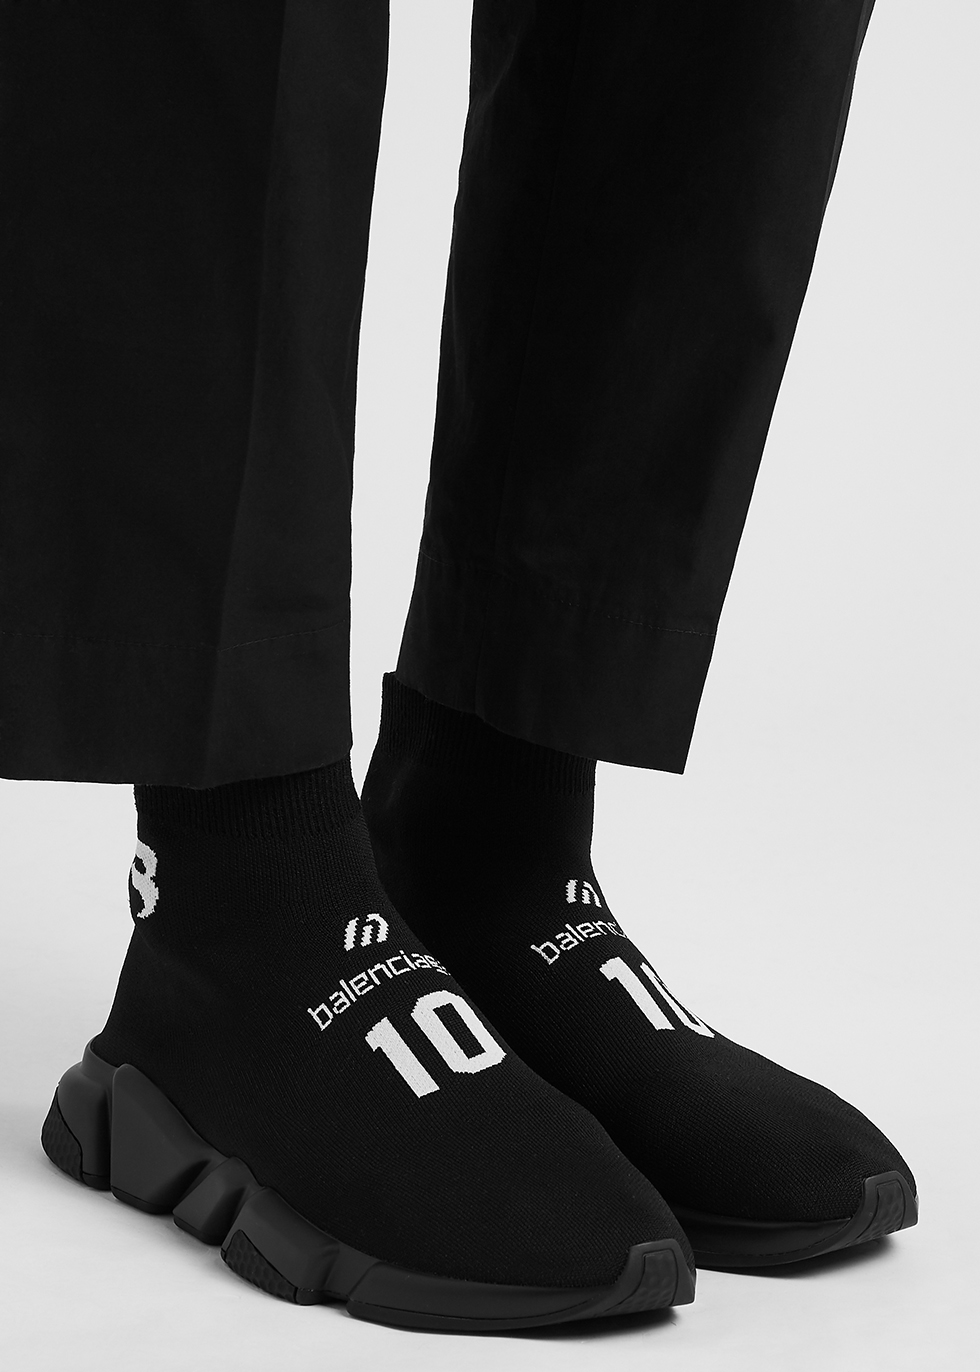 Giày thể thao Balenciaga speed đen trắng hot 2022Giày sneaker cao cấp  Balen speed cao cổ đen trắng chuẩnfull pk  Shopee Việt Nam